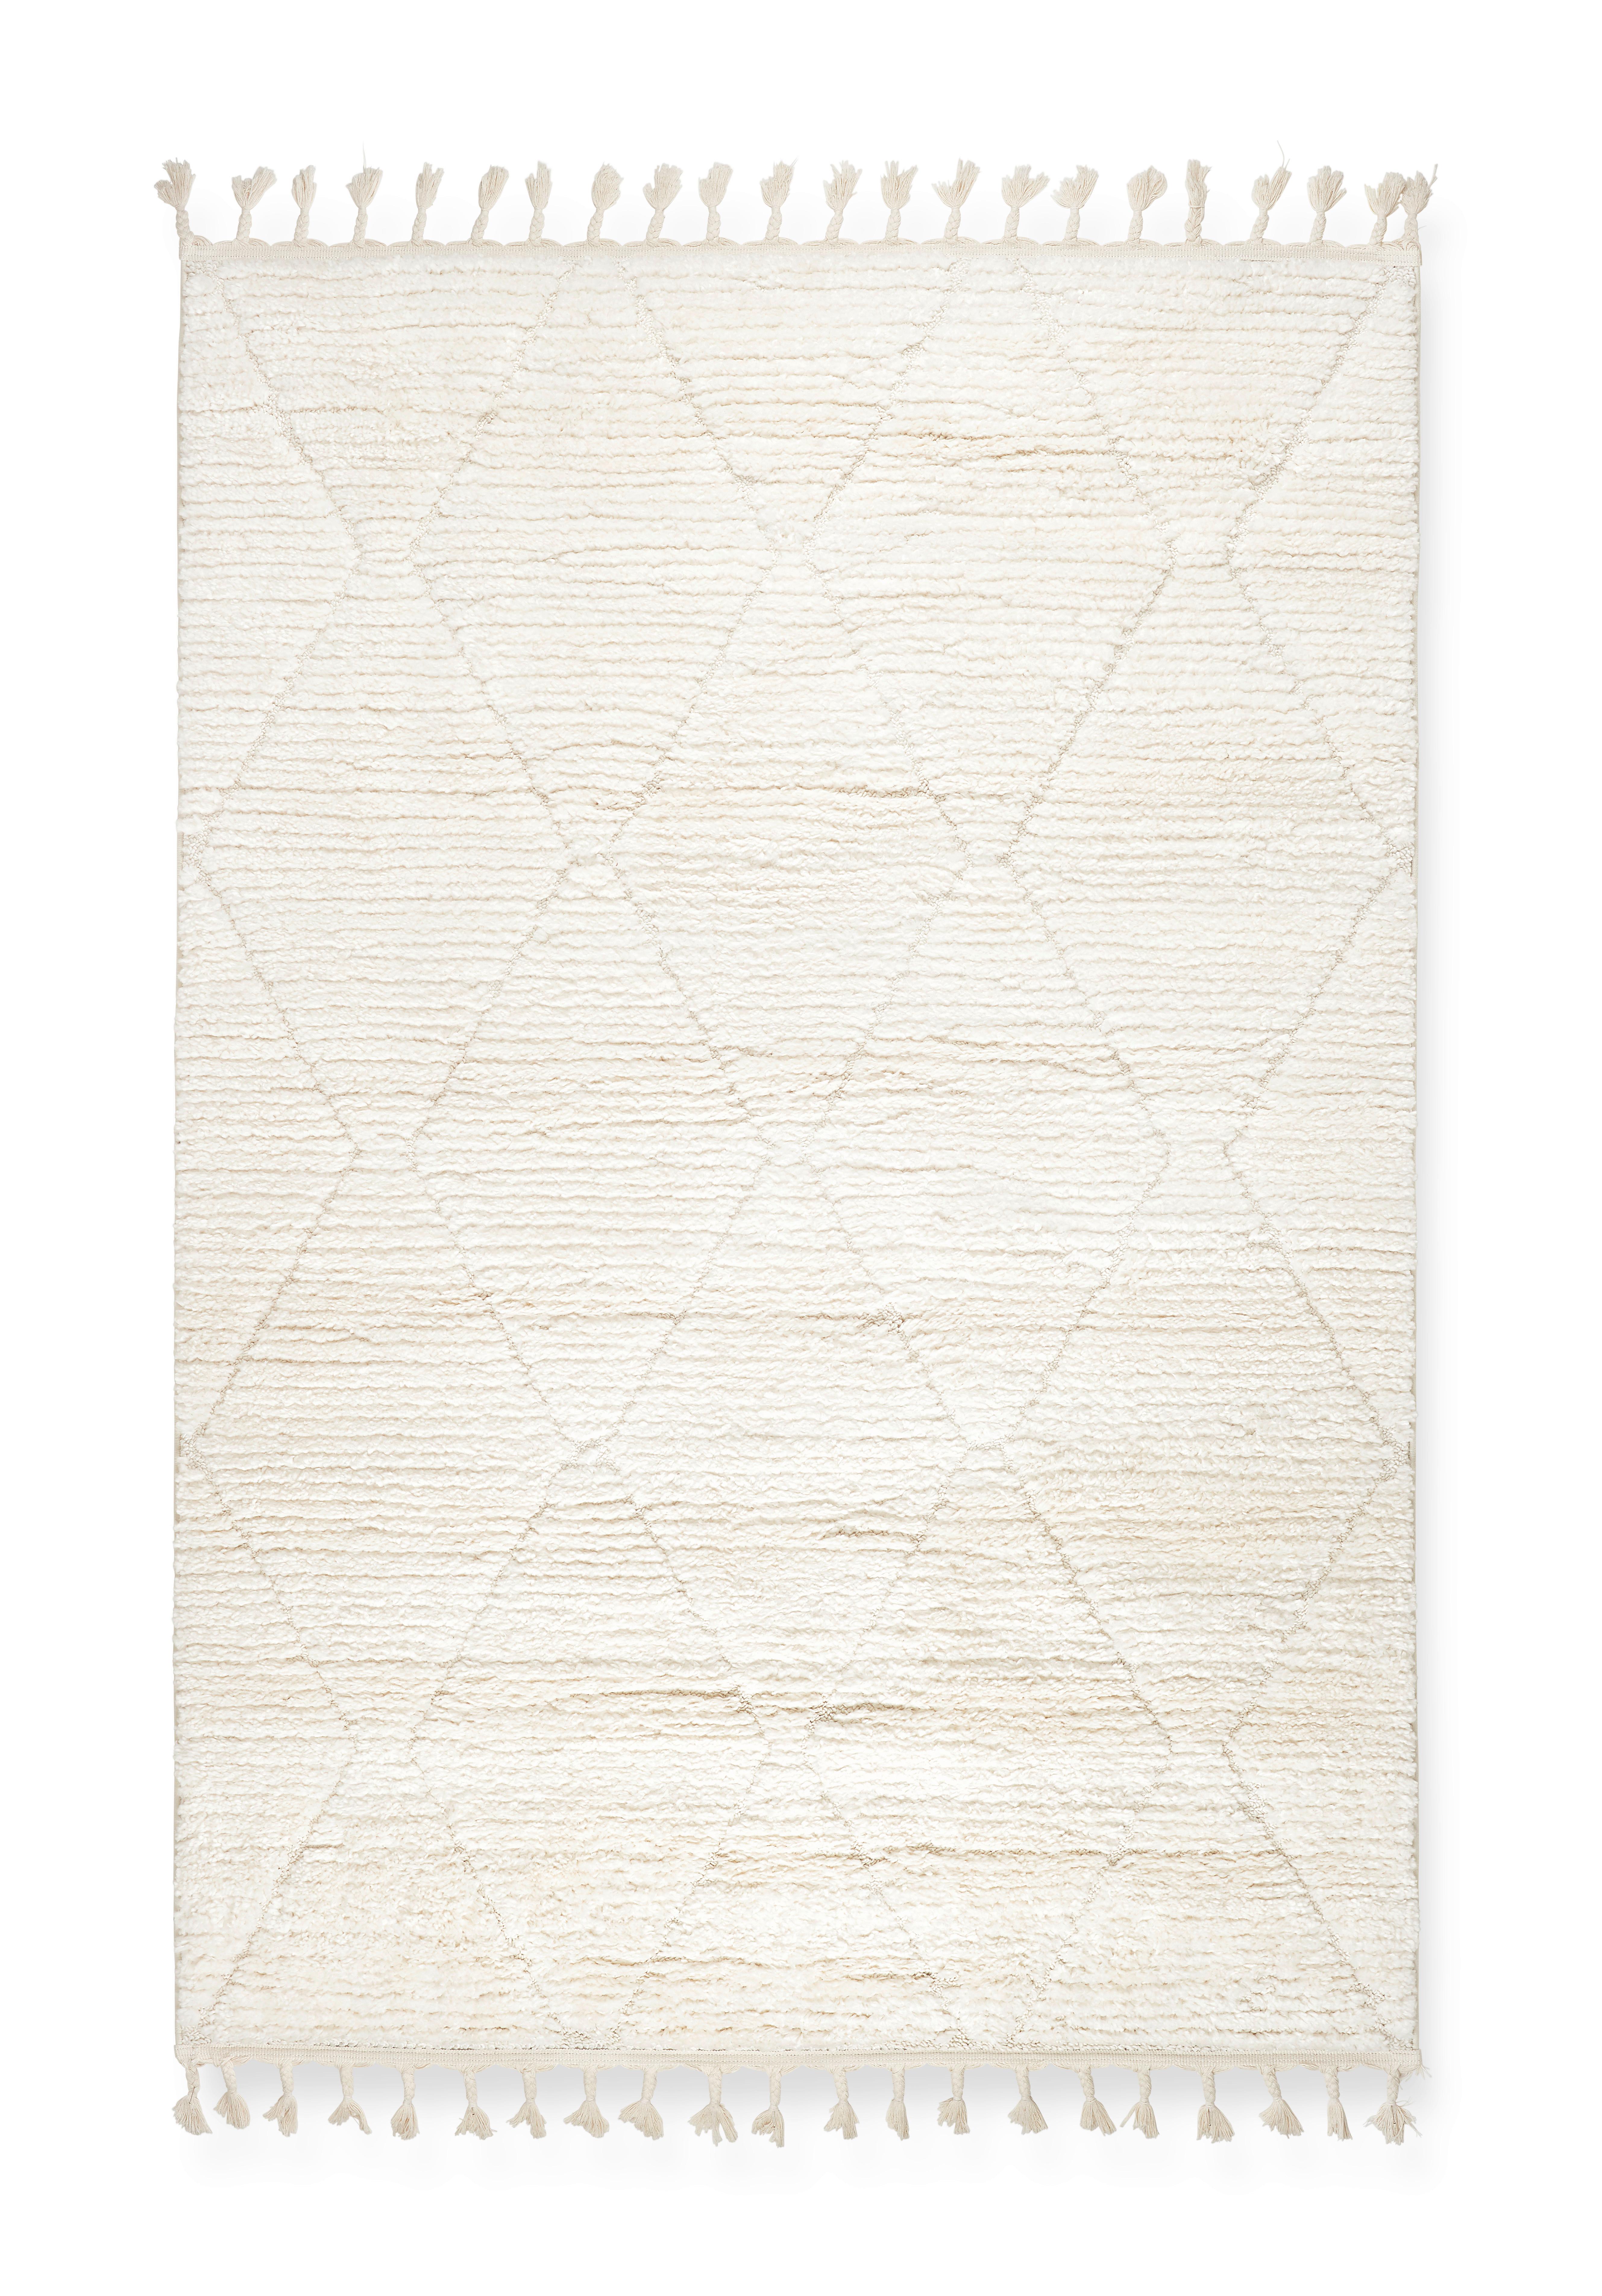 Webteppich Selma in Weiß ca. 80x150cm - Weiß, Basics, Textil (80/150cm) - Modern Living